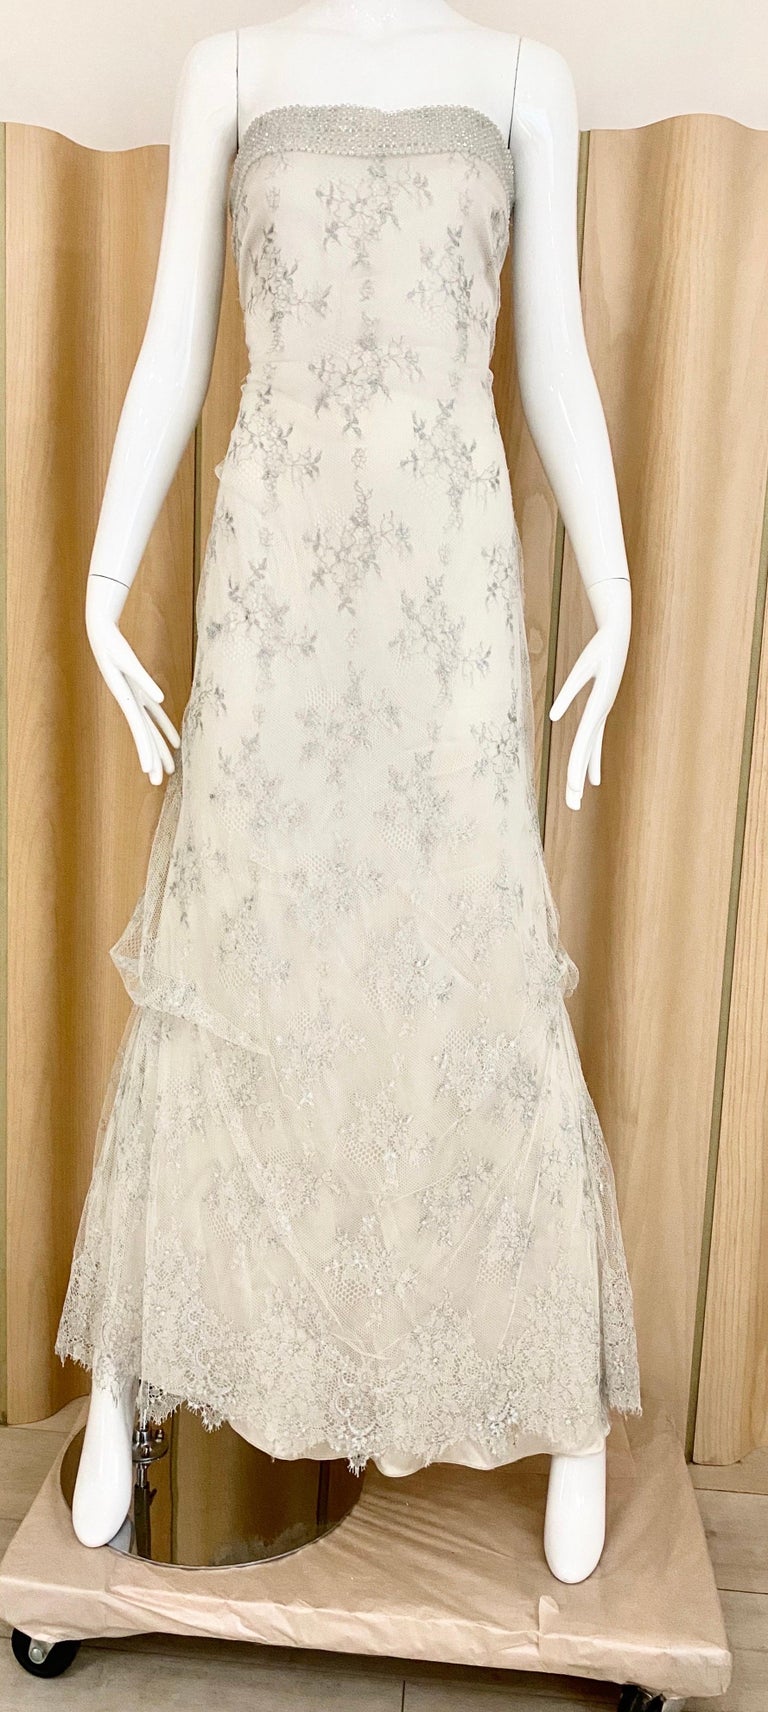 Giorgio Armani Strapless White and Silver Lace Gown For Sale 9